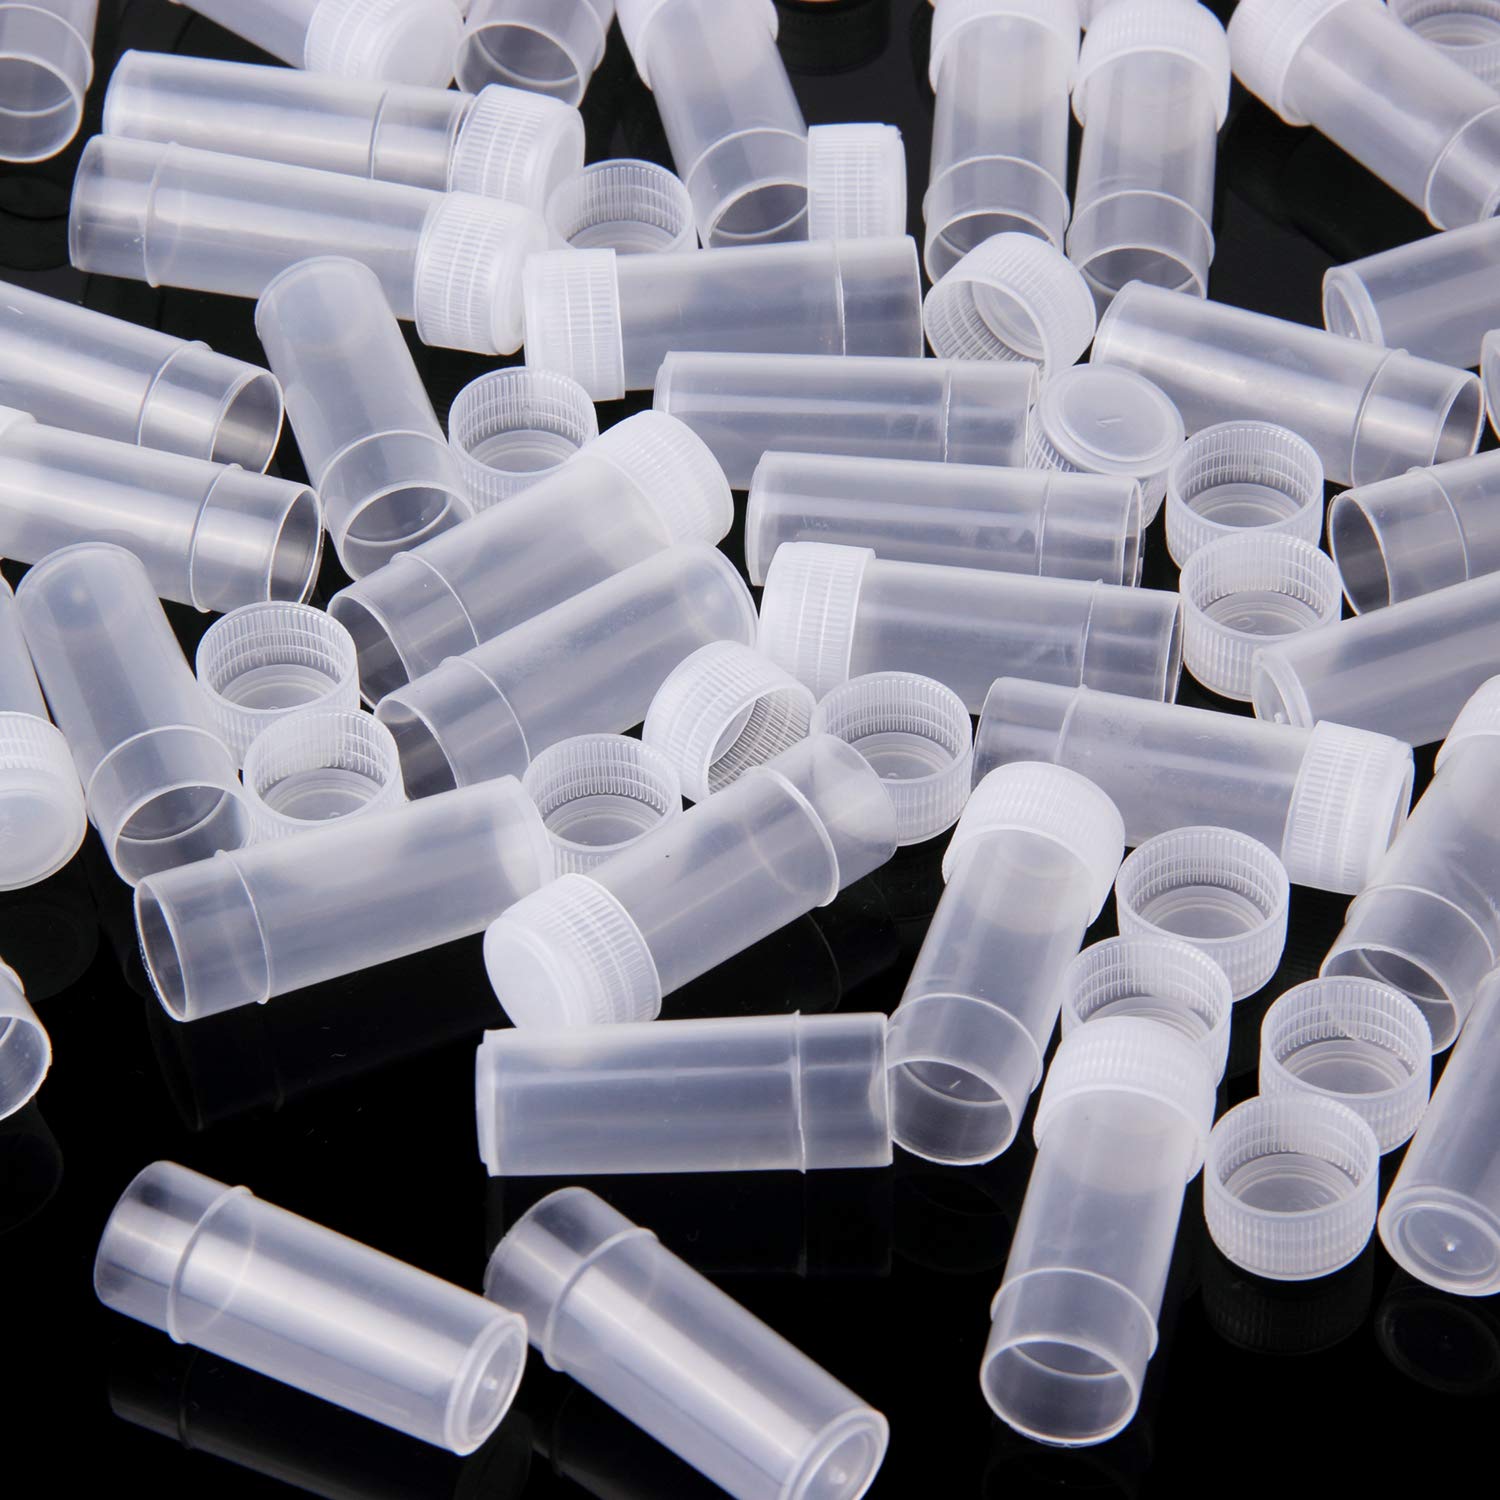 50 Stks/partij 5Ml Plastic Monster Flessen Mini Clear Opslag Flesjes Case Pil Capsule Storage Containers Potten Reageerbuis Pot voor Deksel